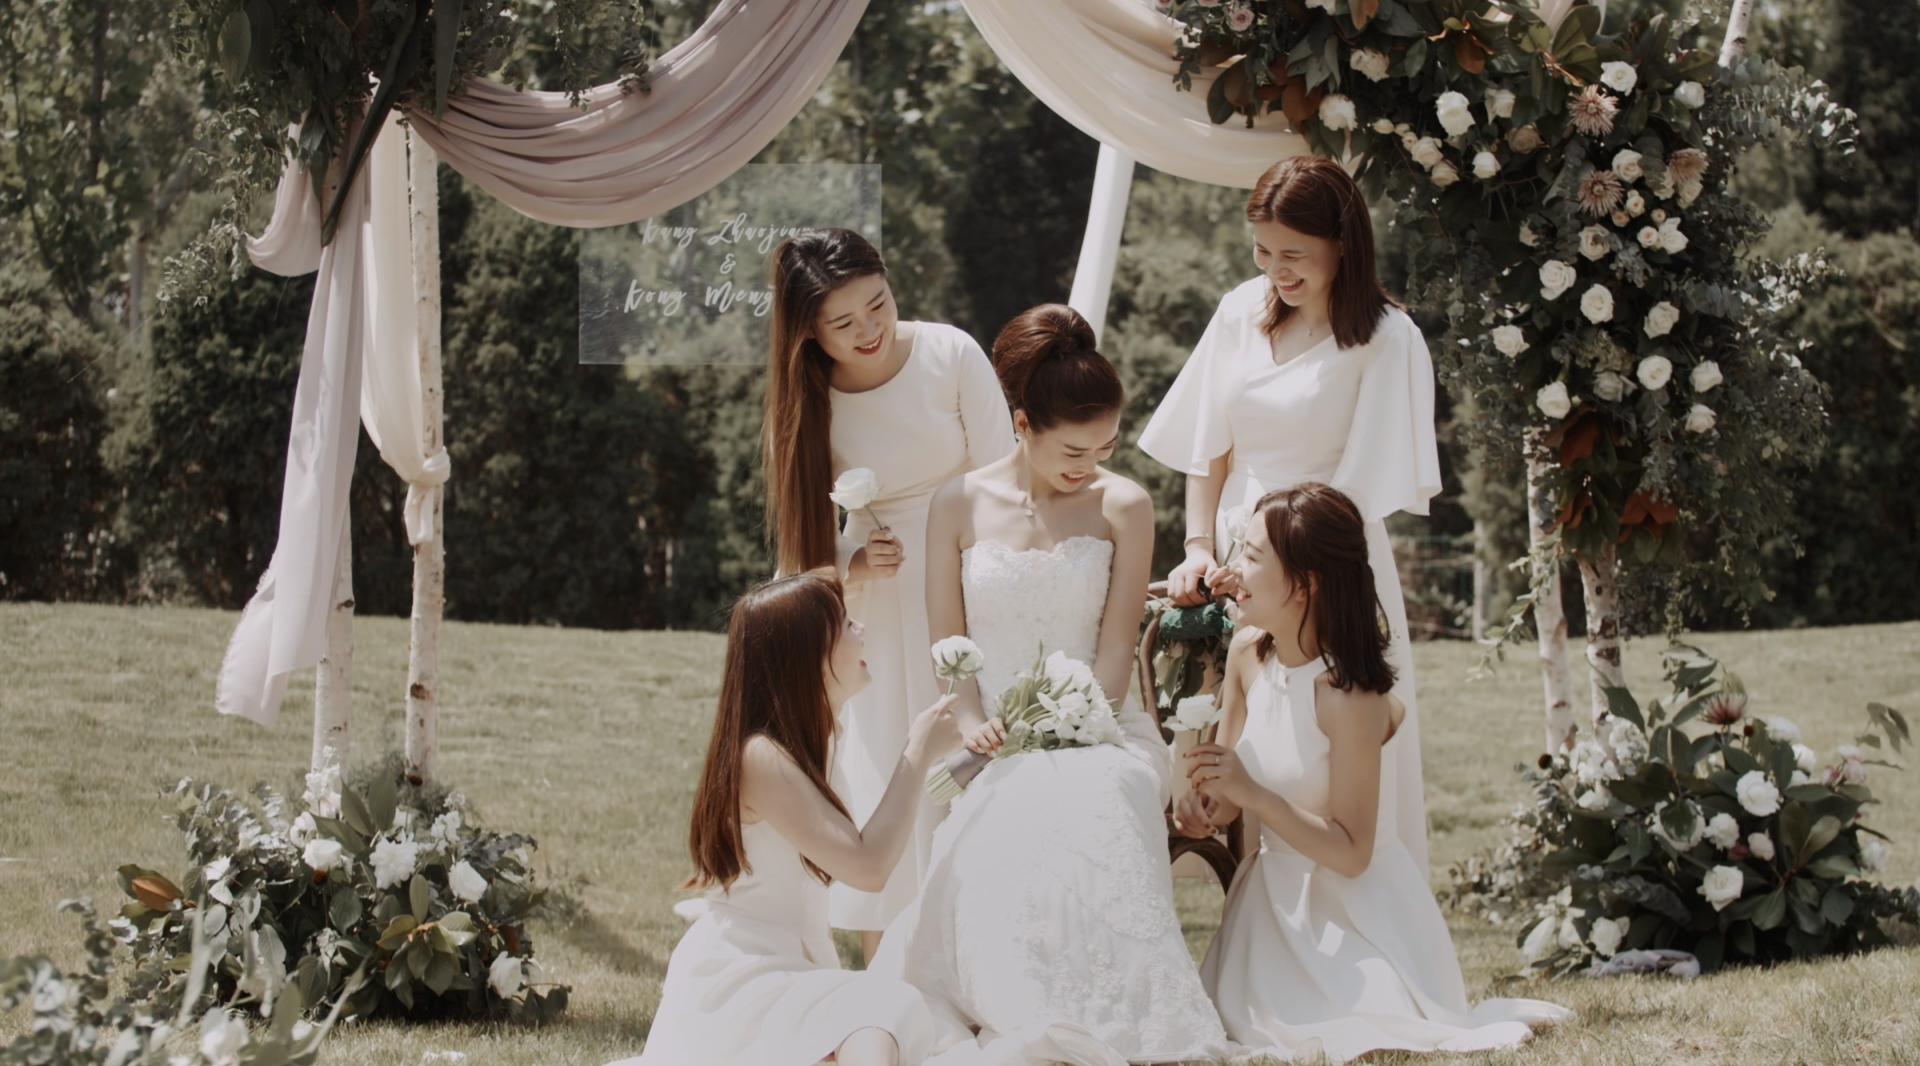 June 8, 2019 wedding film